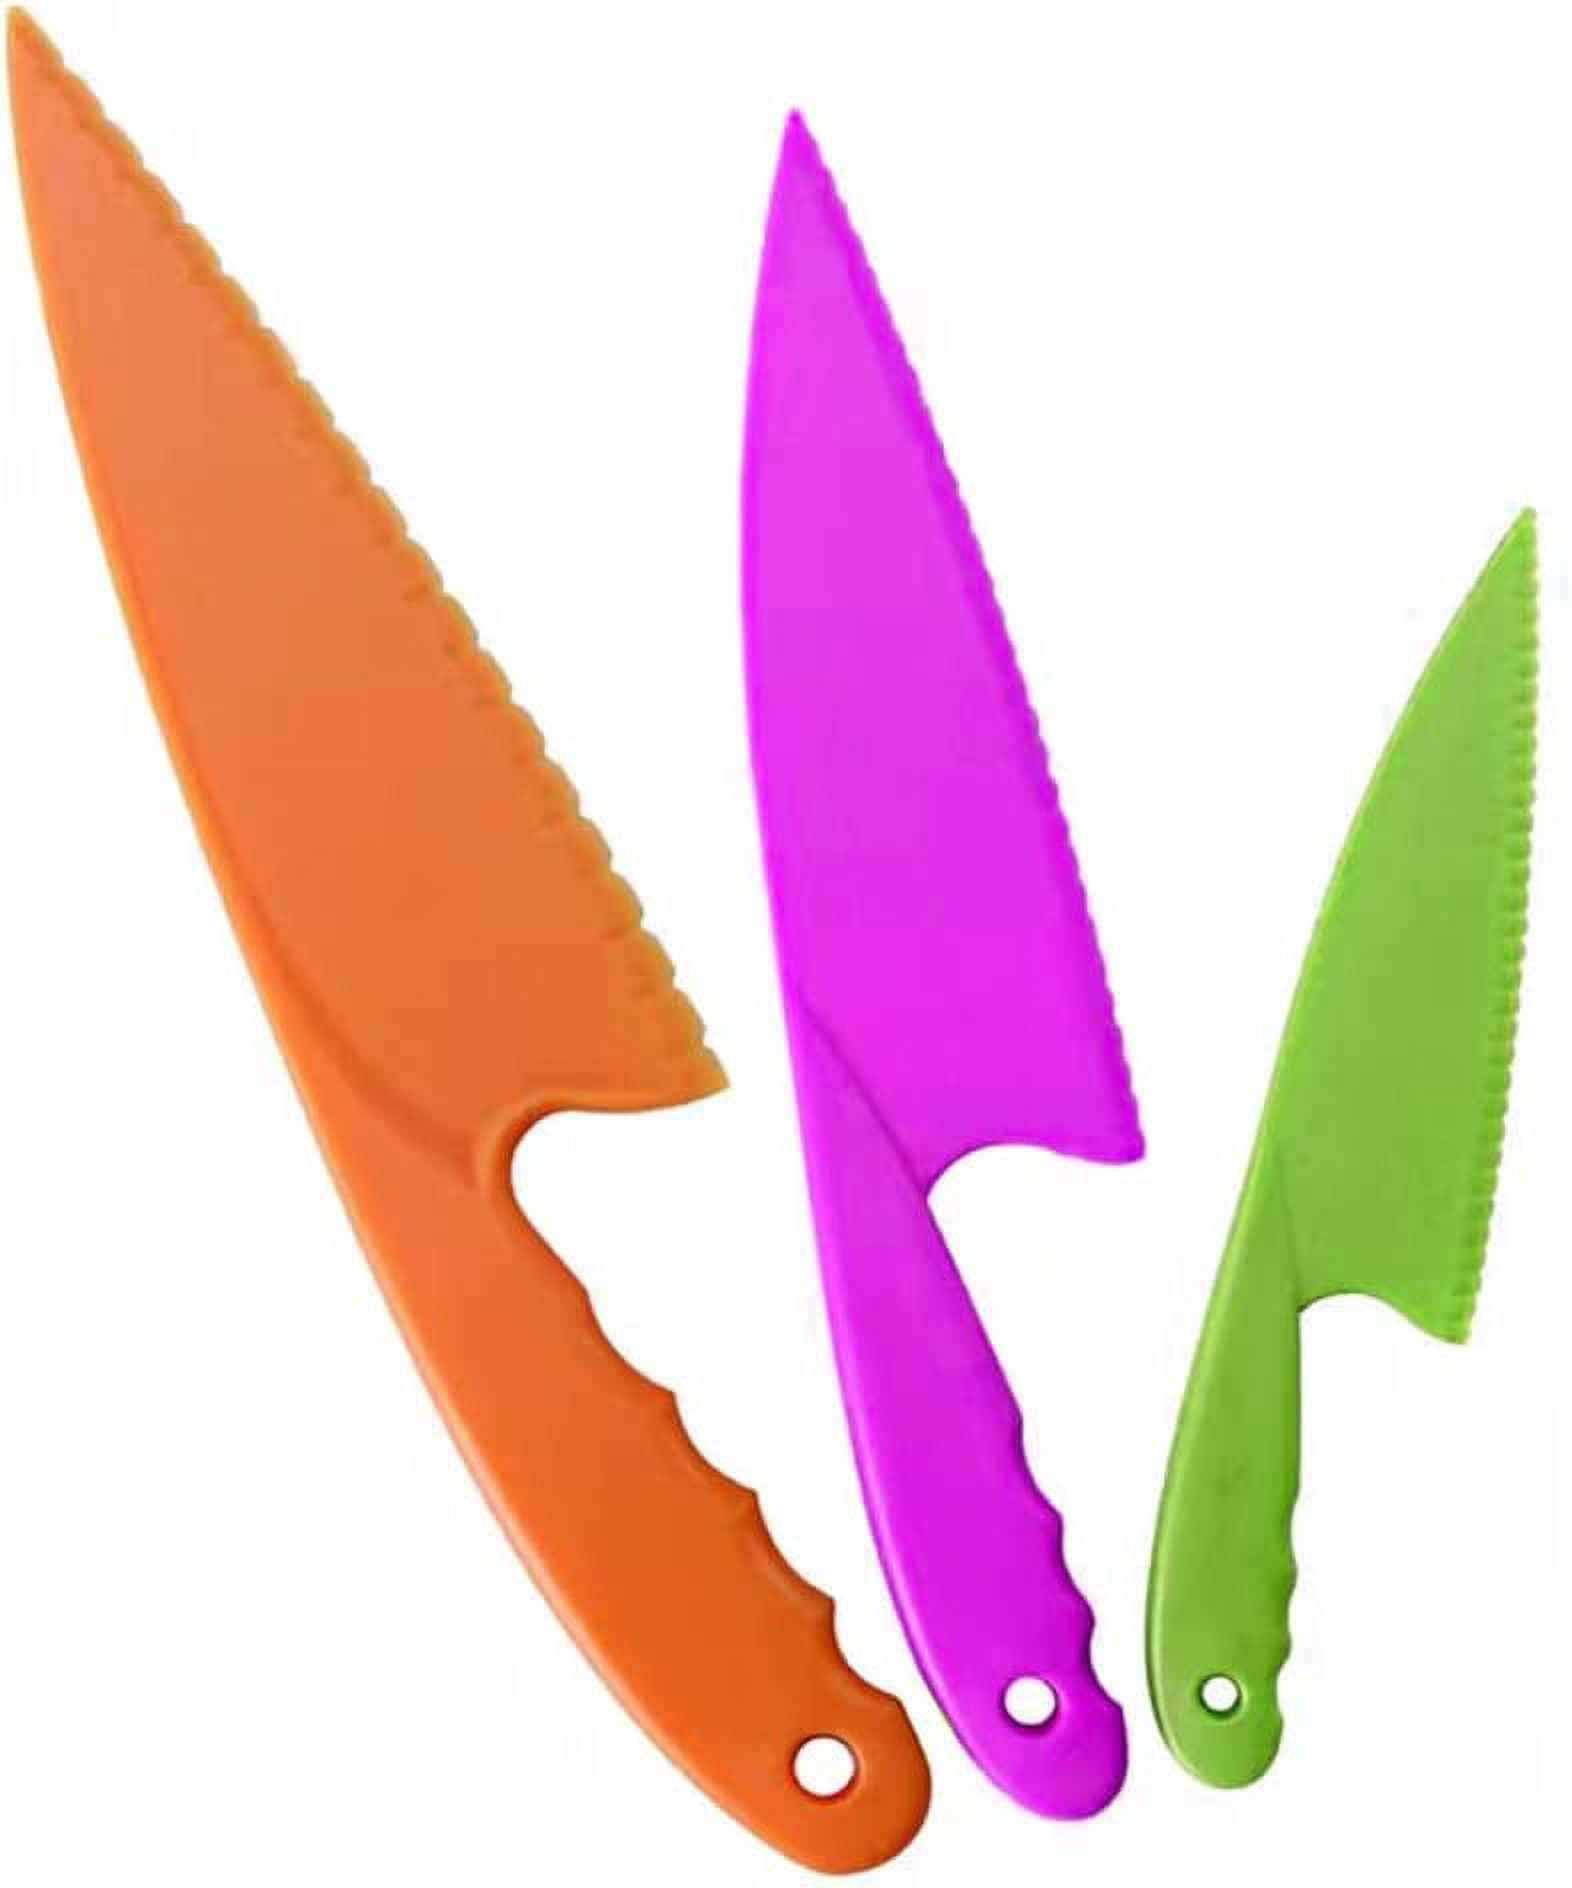 Dropship Set Of 3 Plastic Kitchen Knife For Kids, Safe Nylon